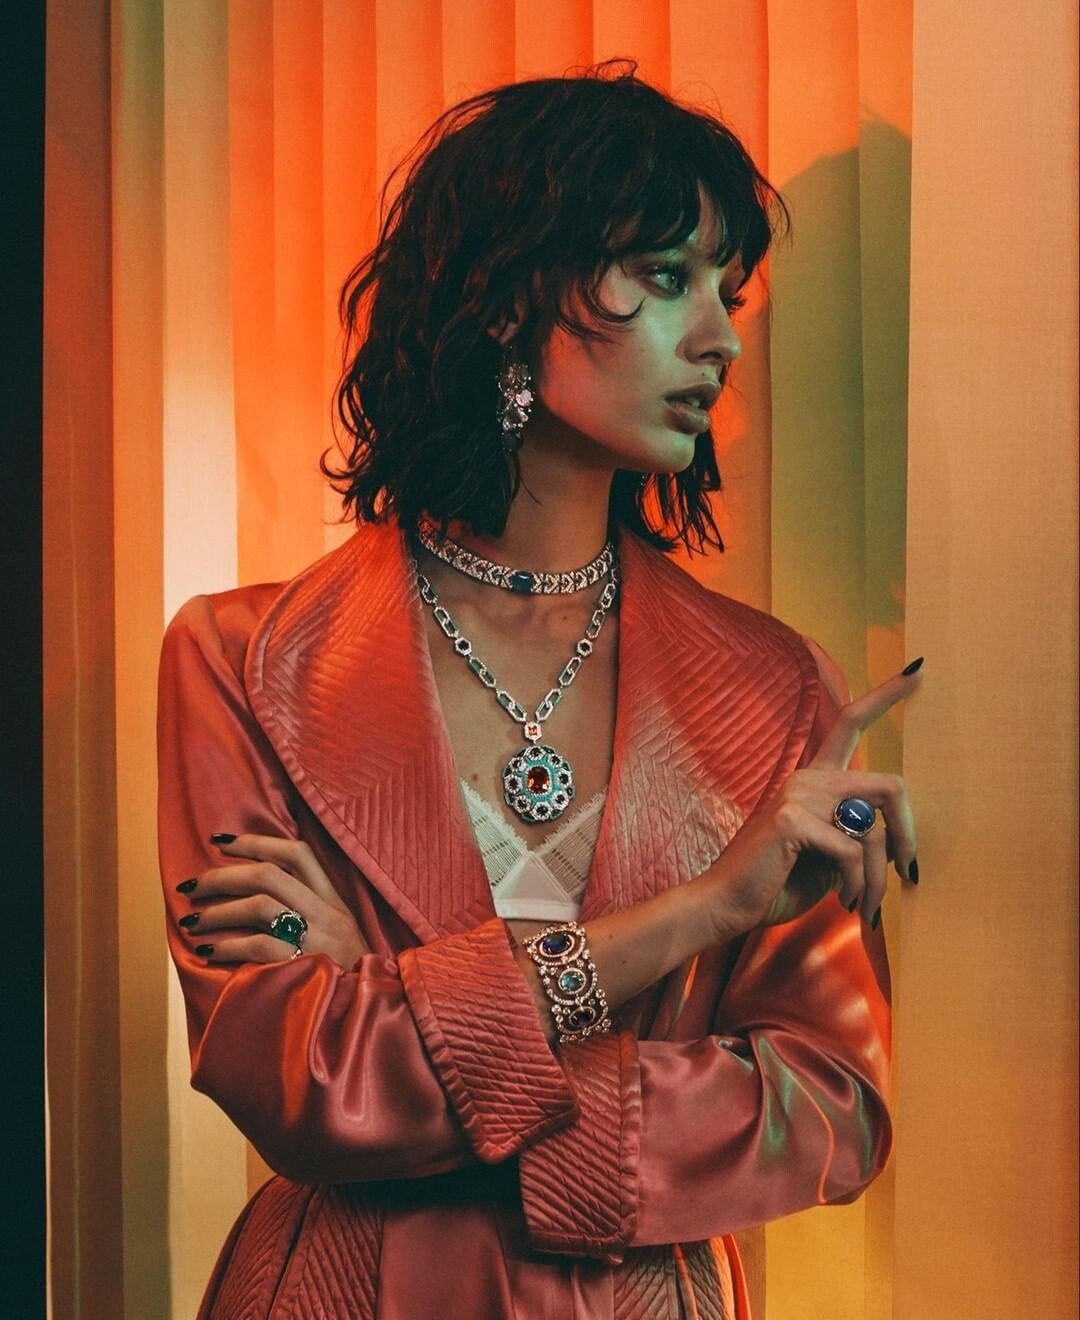 Bulgari Cinemagia High Jewellery necklace and four more vibrant pieces. Photo: @bulgari/Instagram